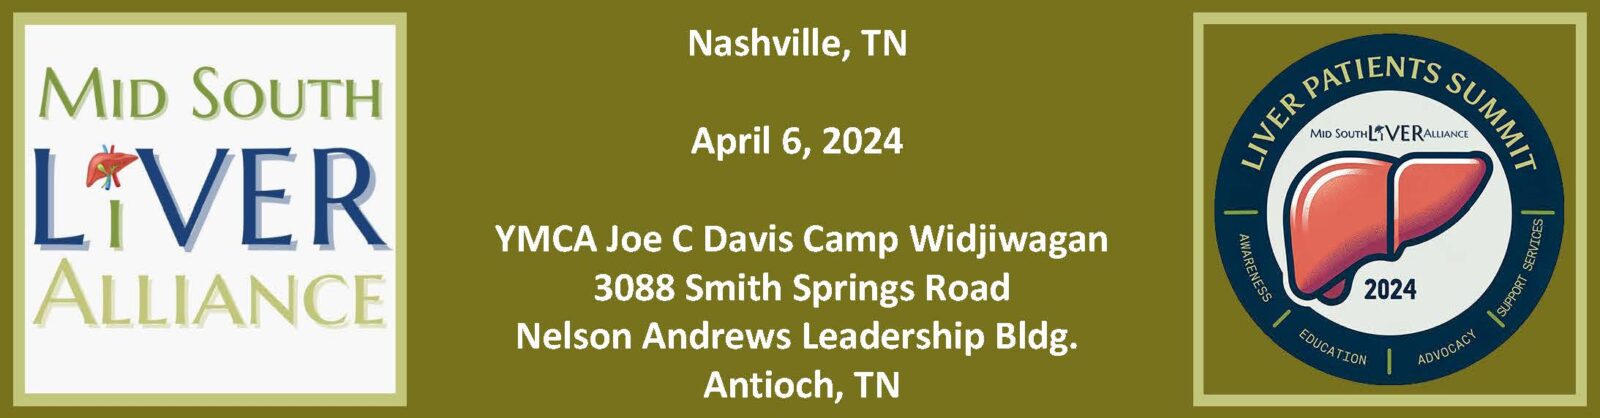 Mid South Liver Alliance Nashville, TN April 6, 2024, YMCA Joe C Davis Camp Widjiwagan, 3088 Smith Springs Rd, Nelson Andrews Leadership Bldg, Antioch, TN Liver Patients Summit 2024